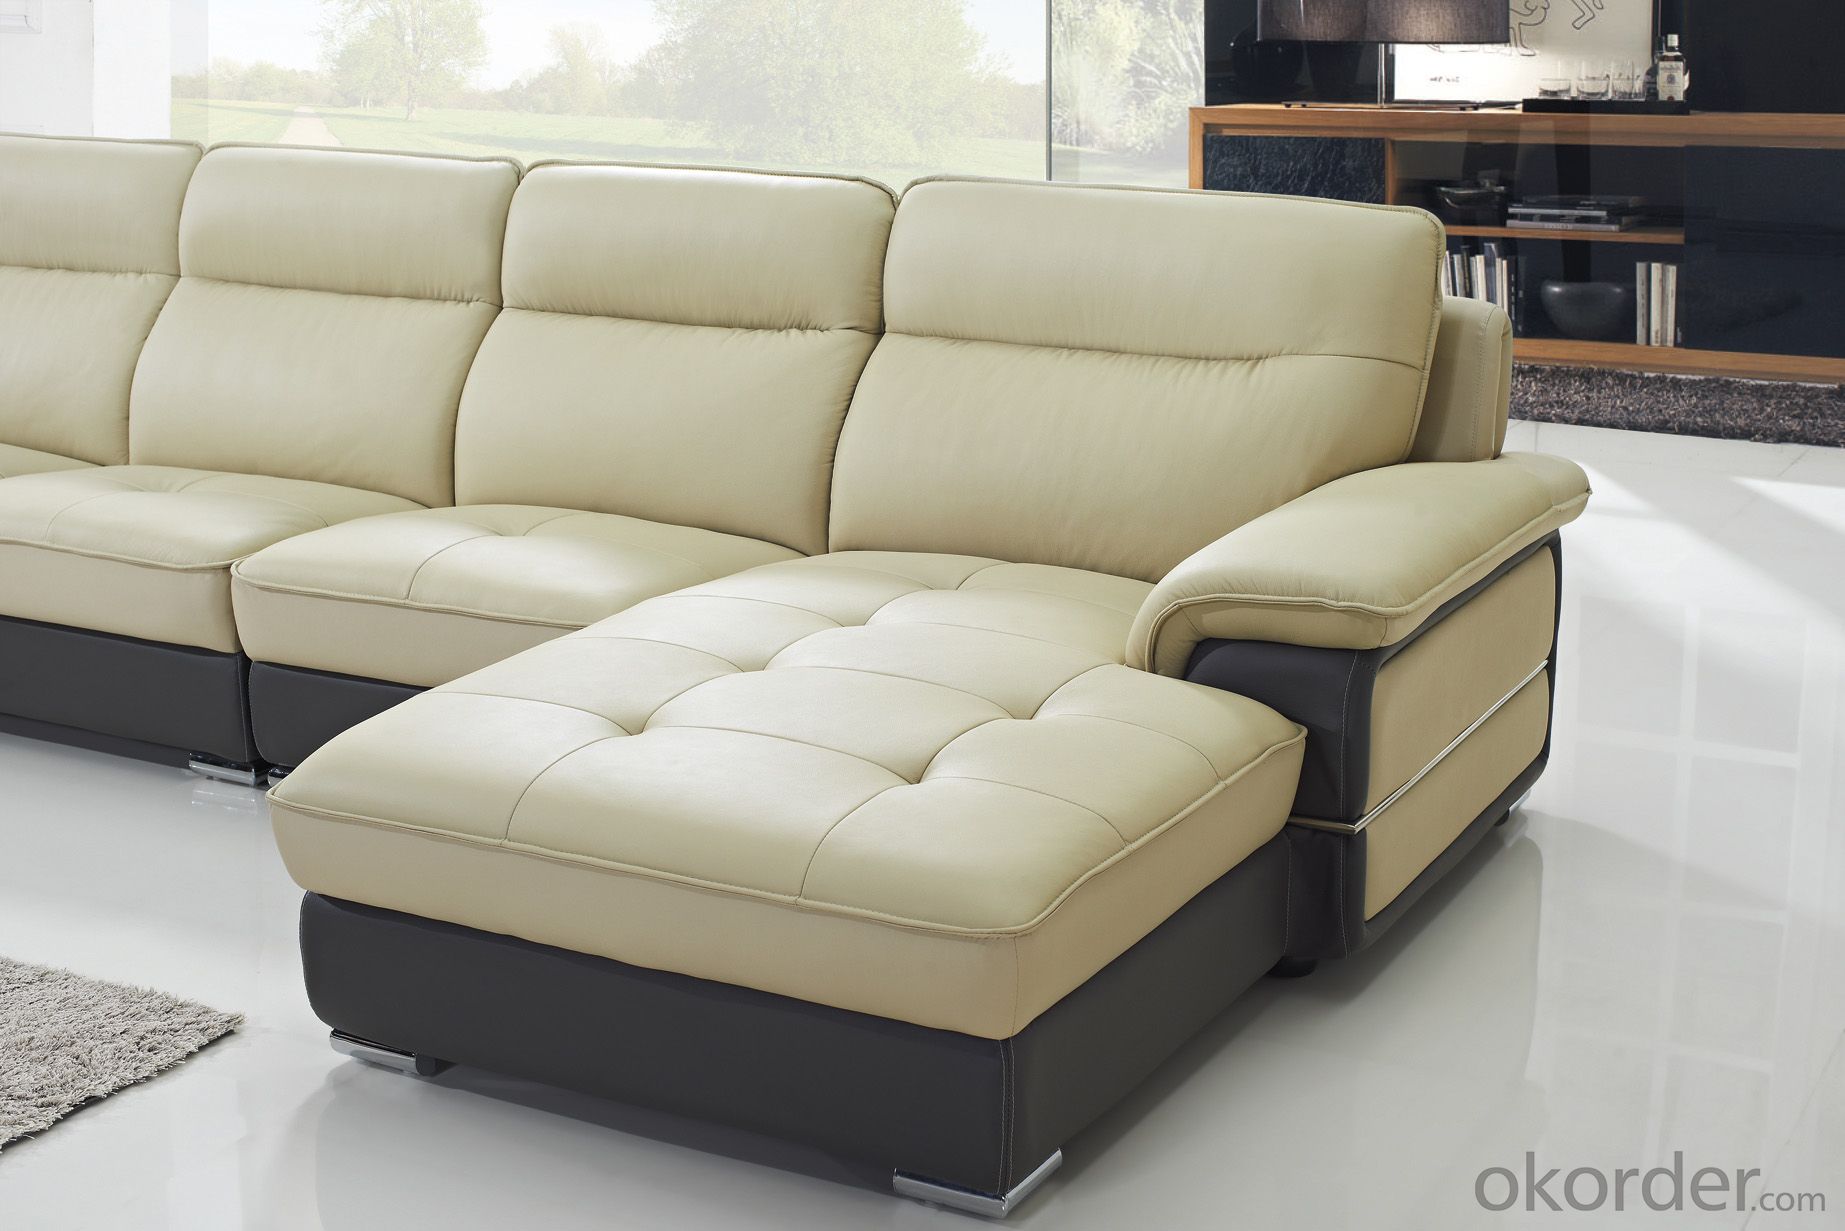 CNBM US popular leather sofa set CMAX-16